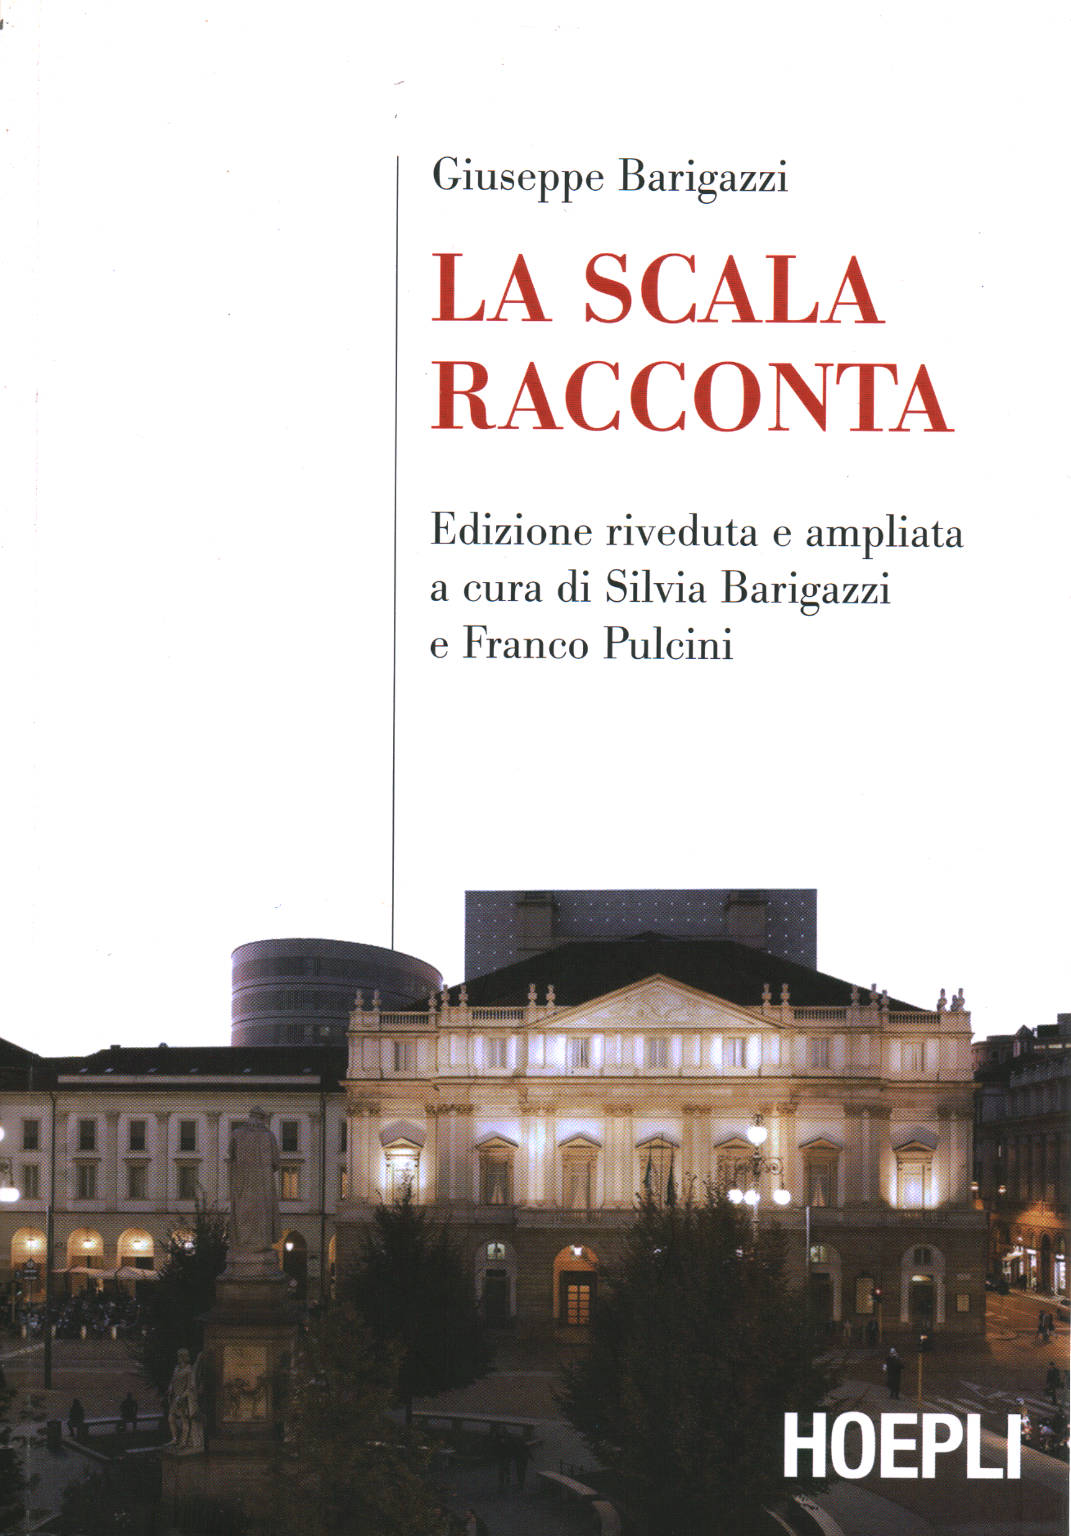 La Scala tells, Giuseppe Barigazzi